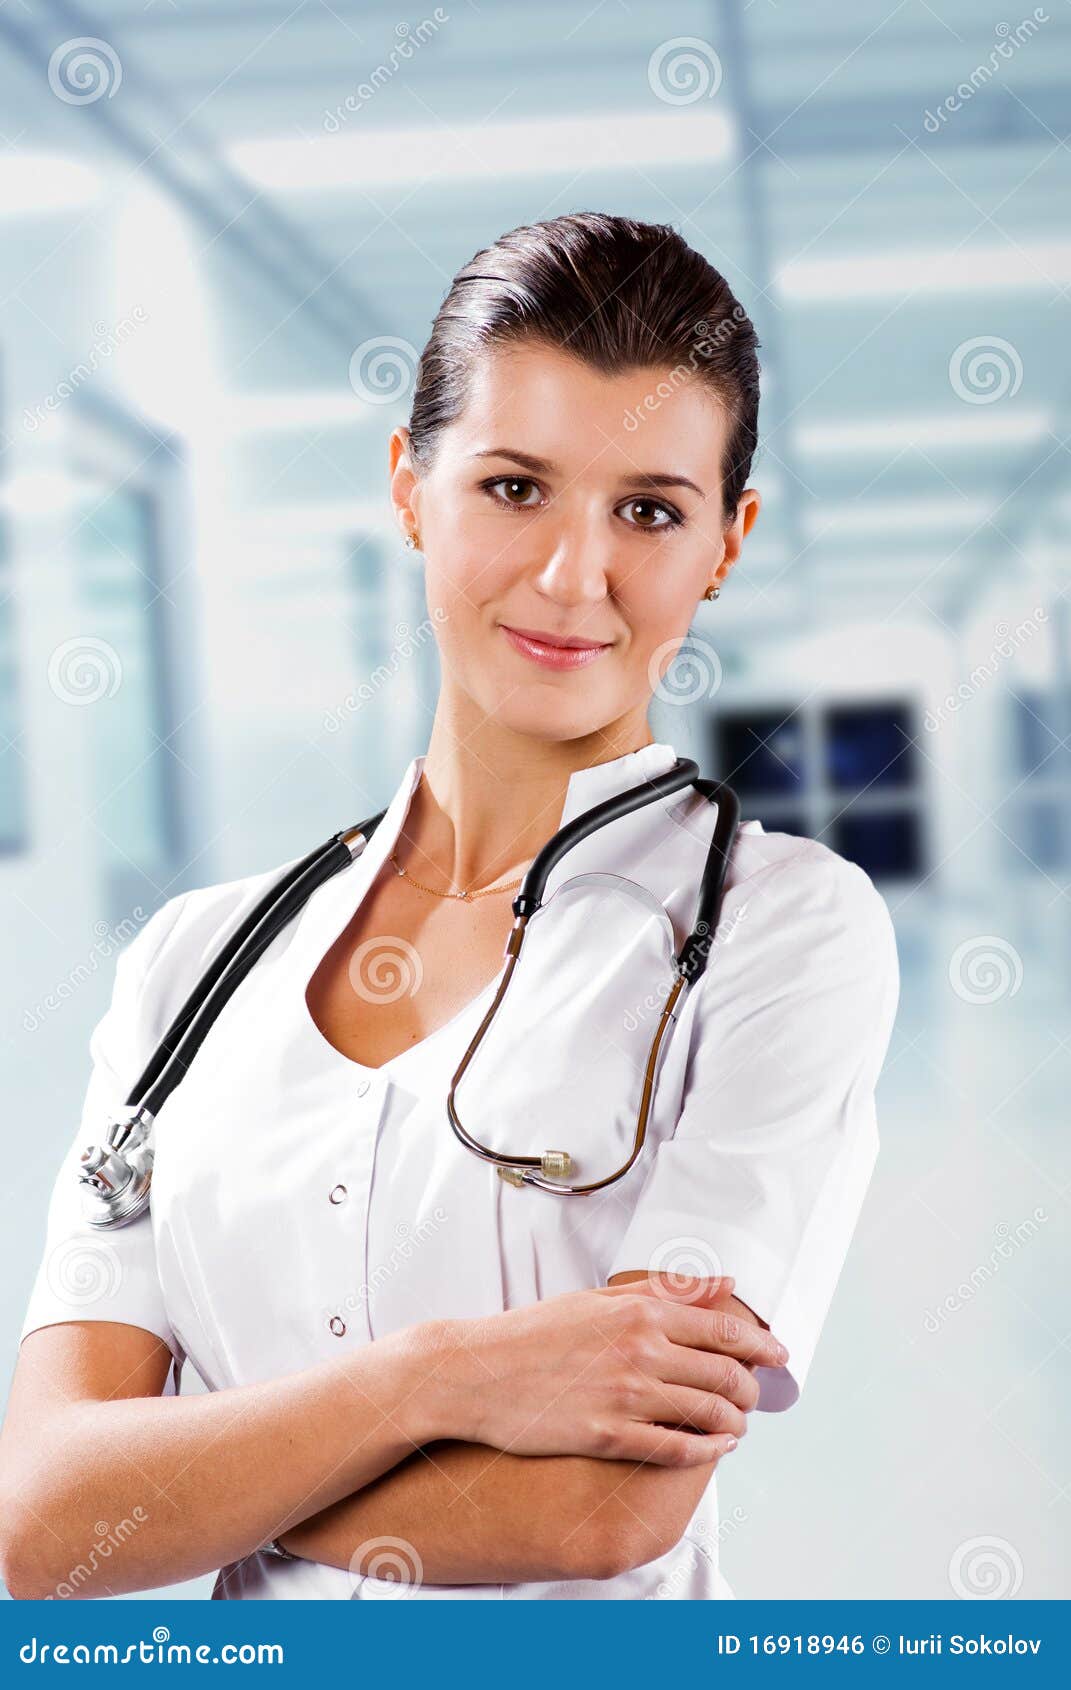 woman-doctor-hospital-16918946.jpg